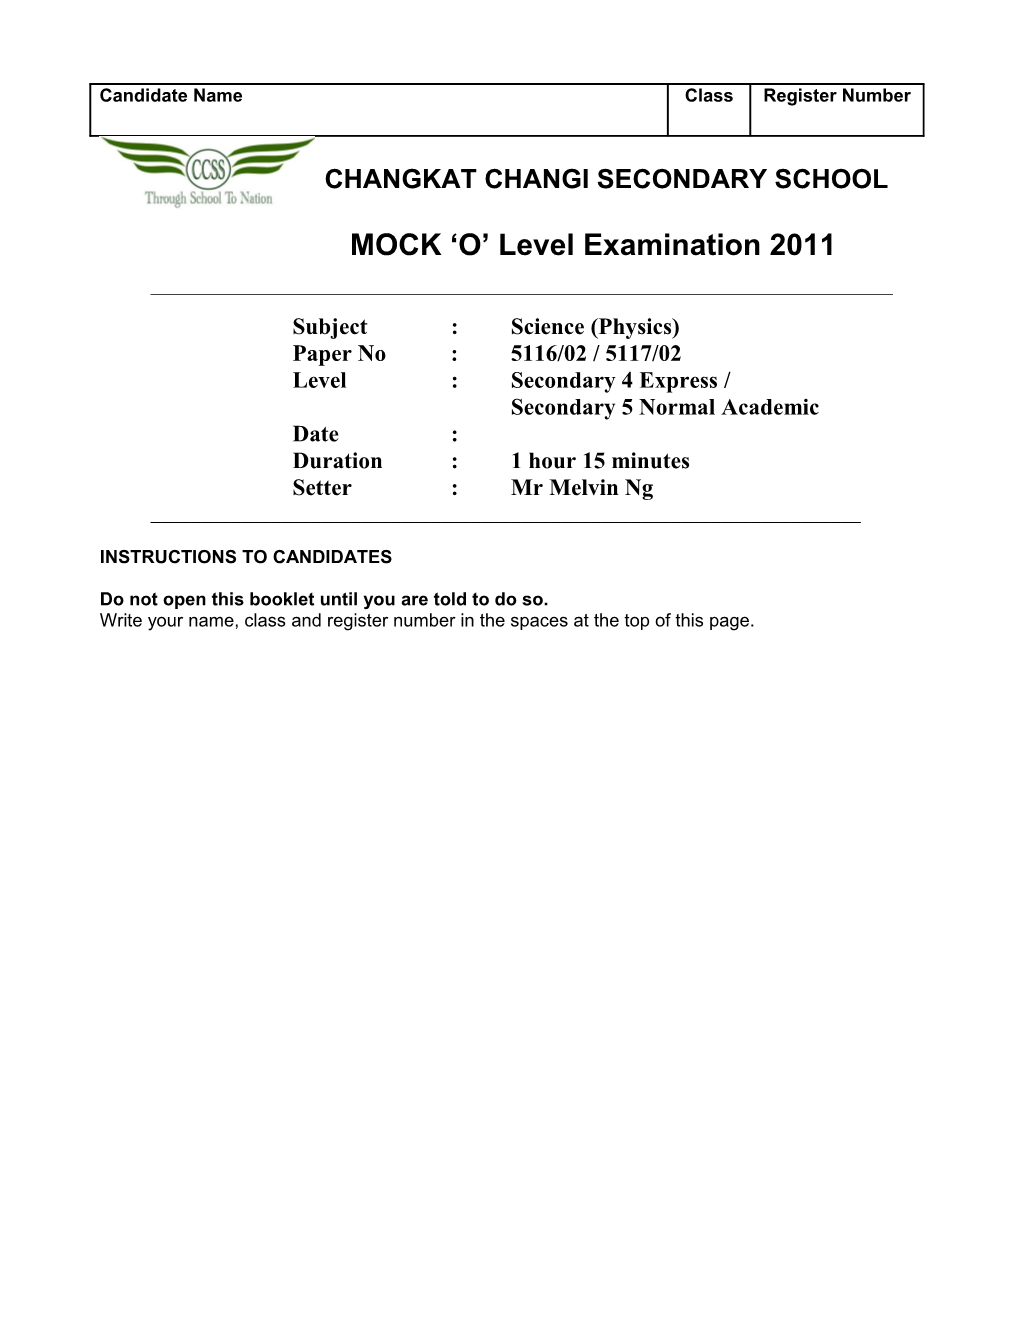 Changkat Changi Secondary School